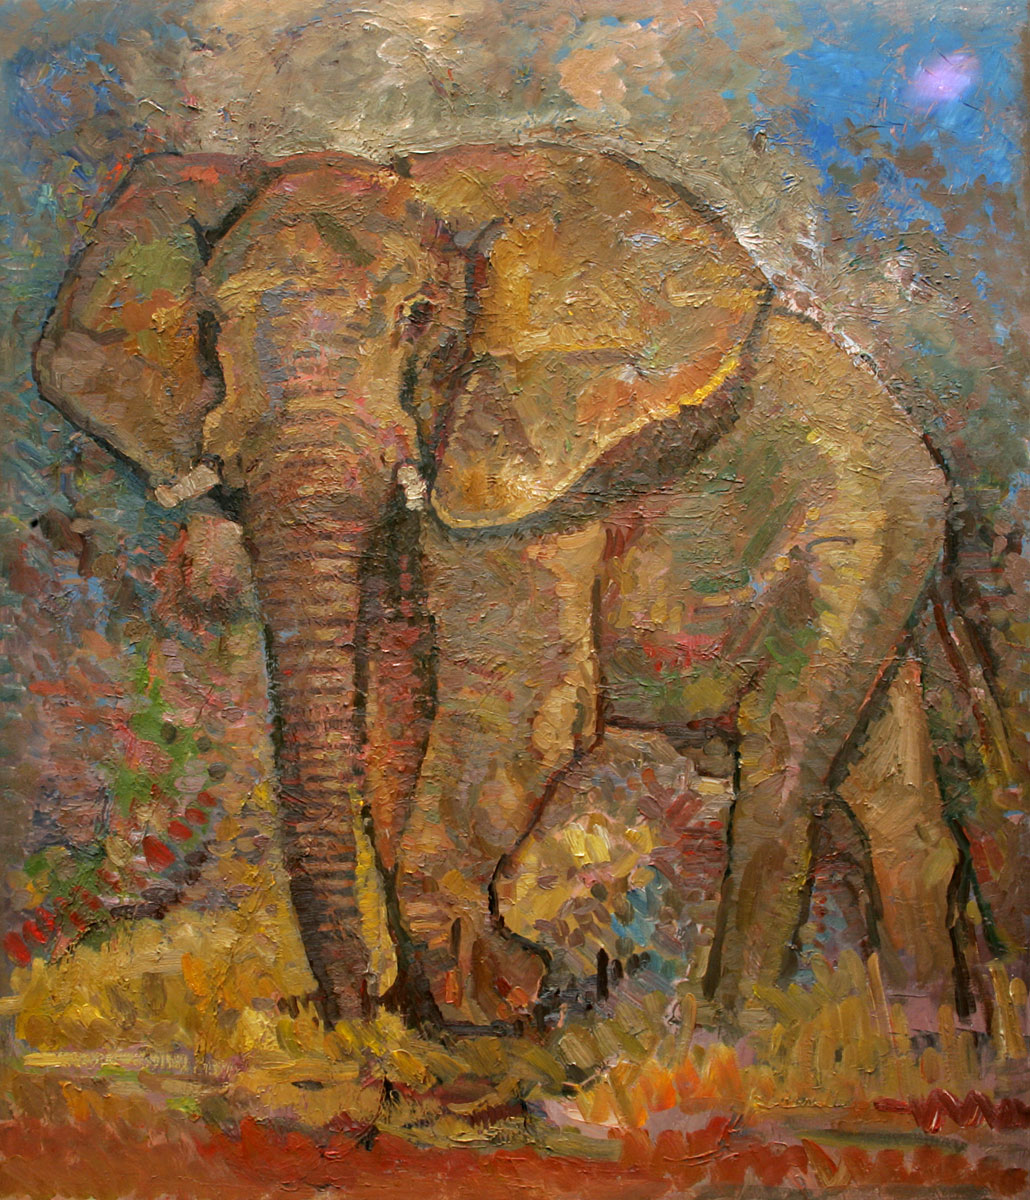 Painting Of Elephant